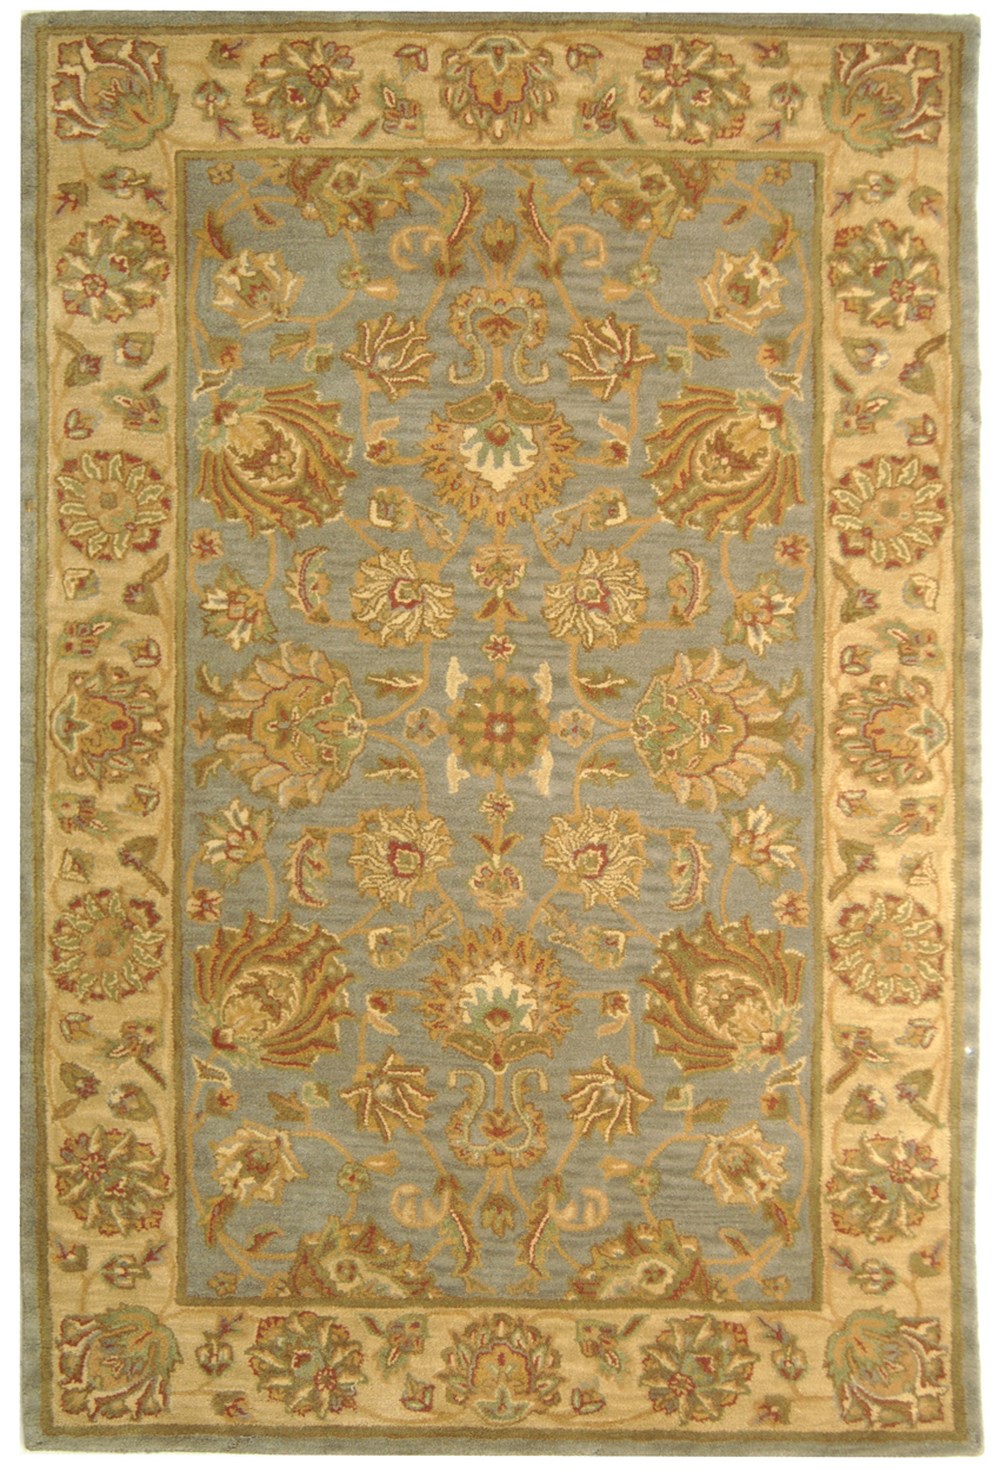 SAFAVIEH Heritage Regis Traditional Wool Area Rug, Blue/Beige, 6' x 9' - image 1 of 4